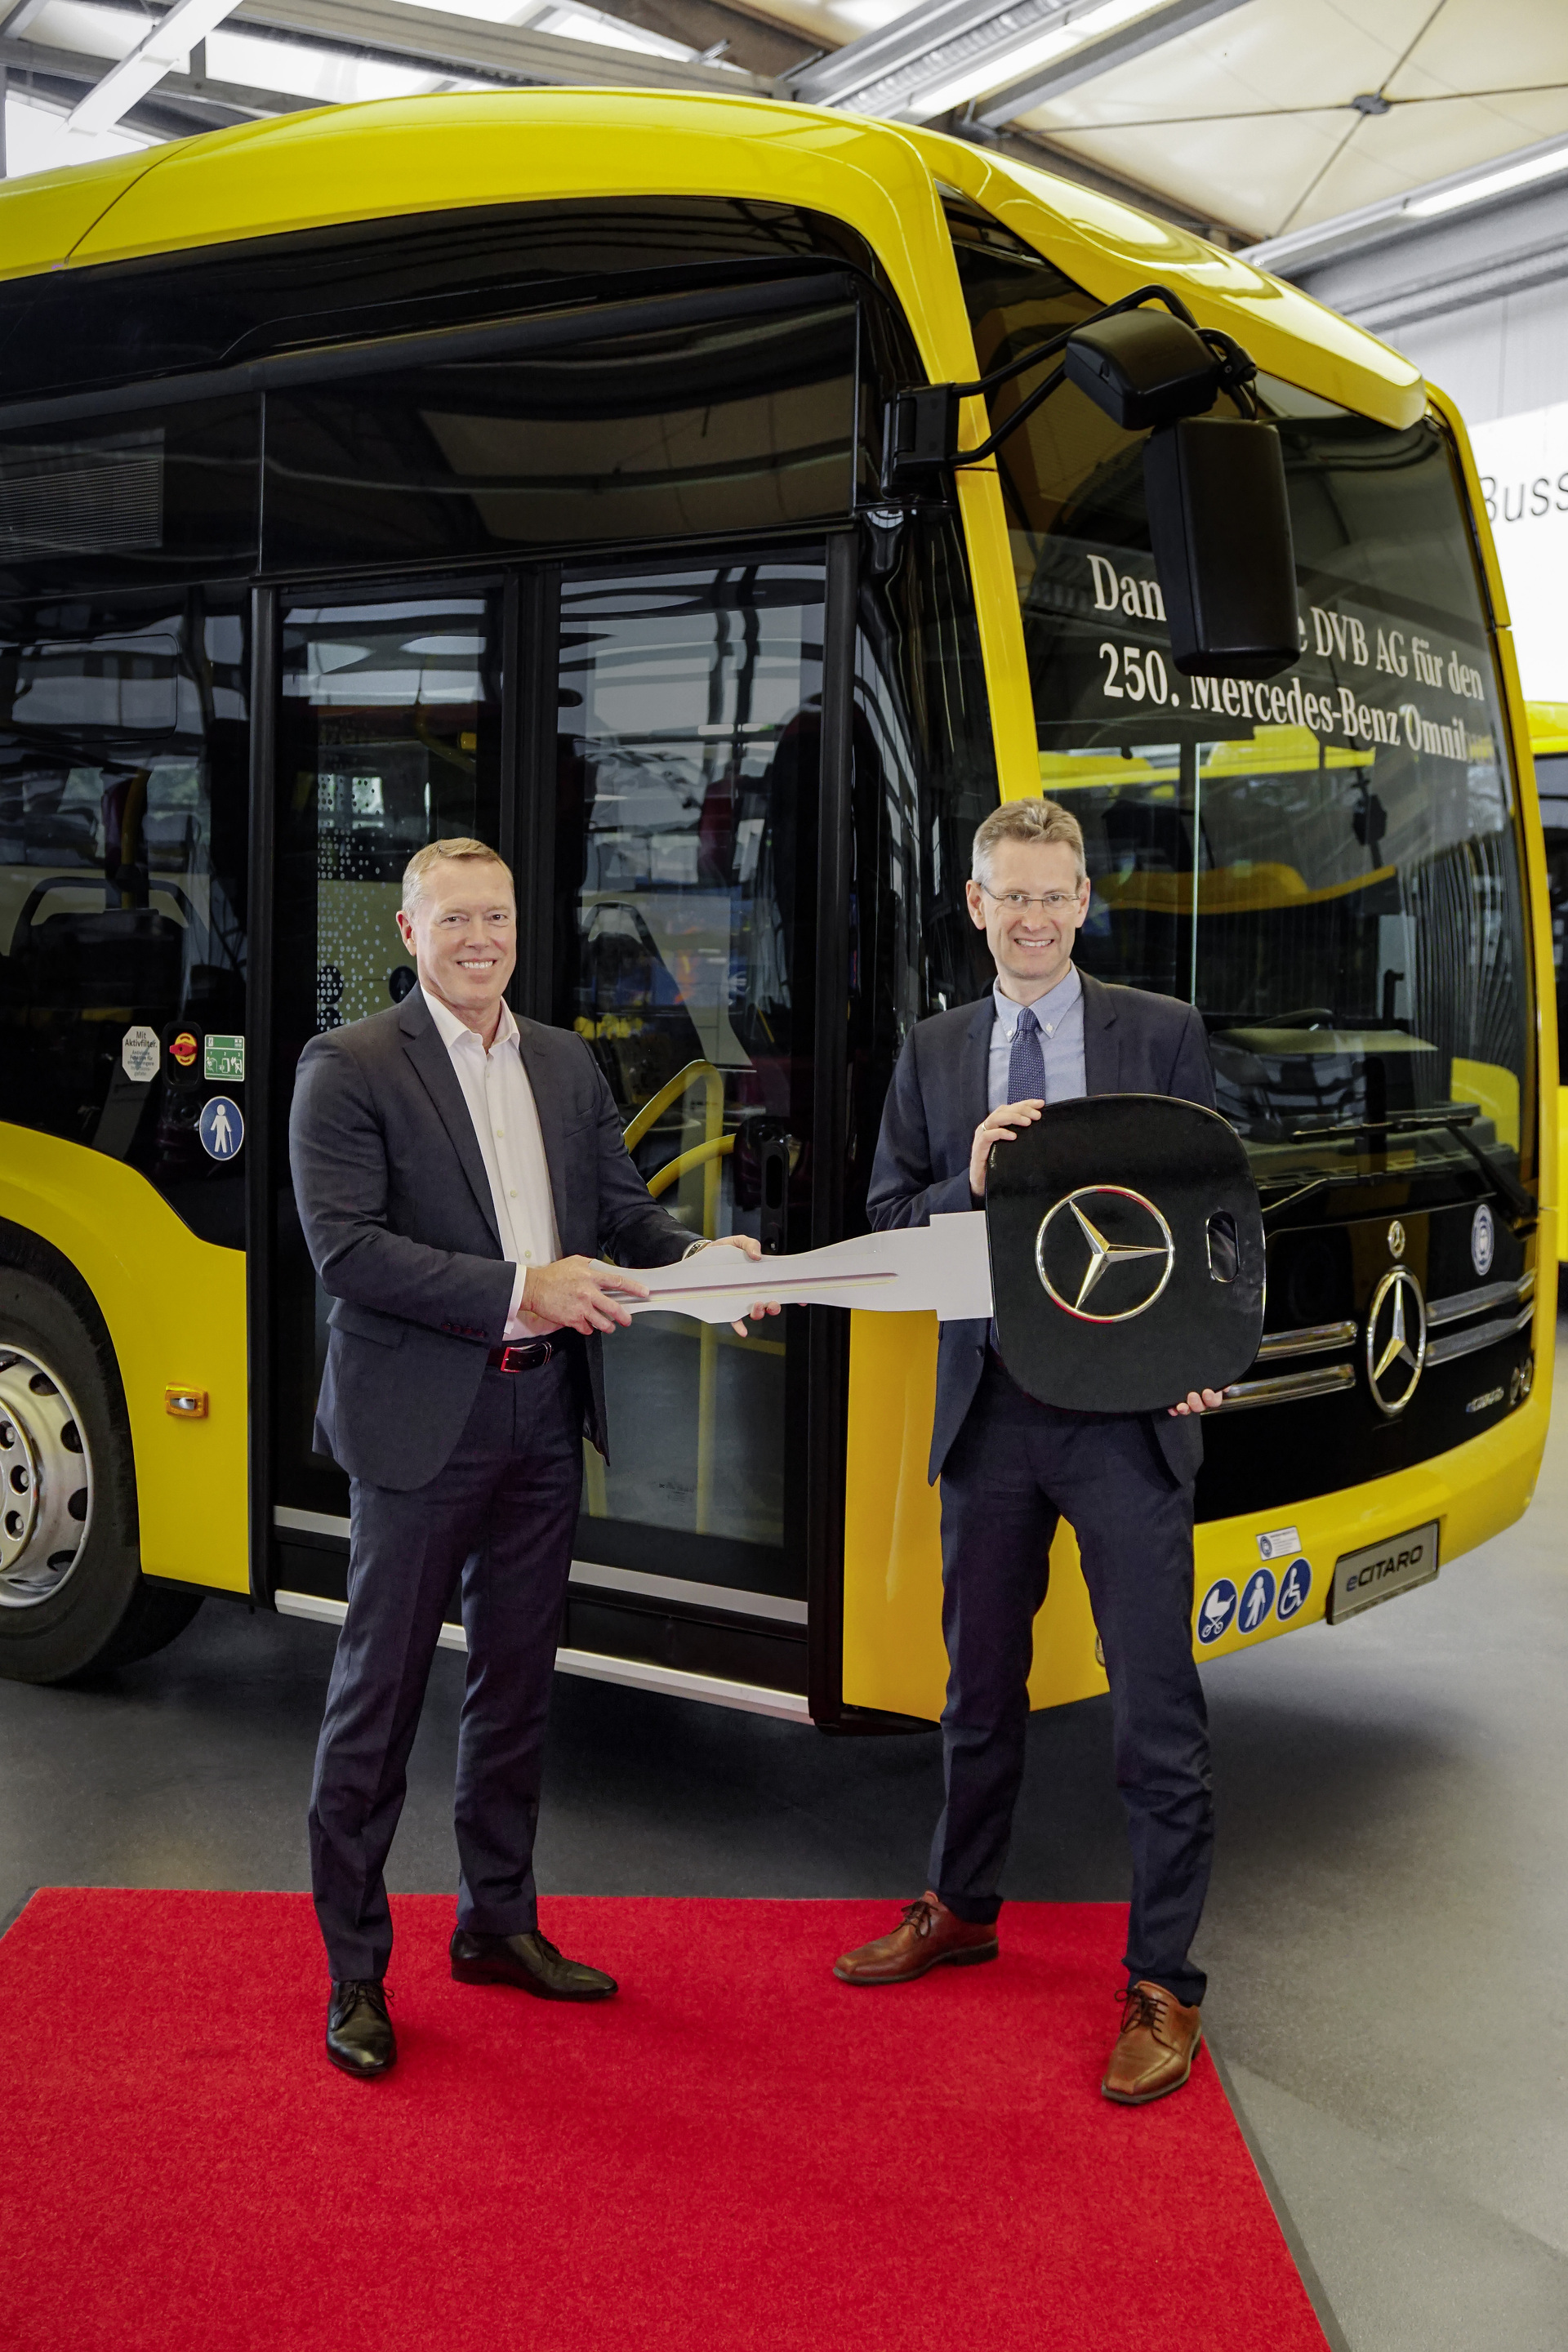 Daimler Buses übergibt eCitaro an Dresdner Verkehrsbetriebe: #wirbewegendresden - jetzt zum 250. Mal